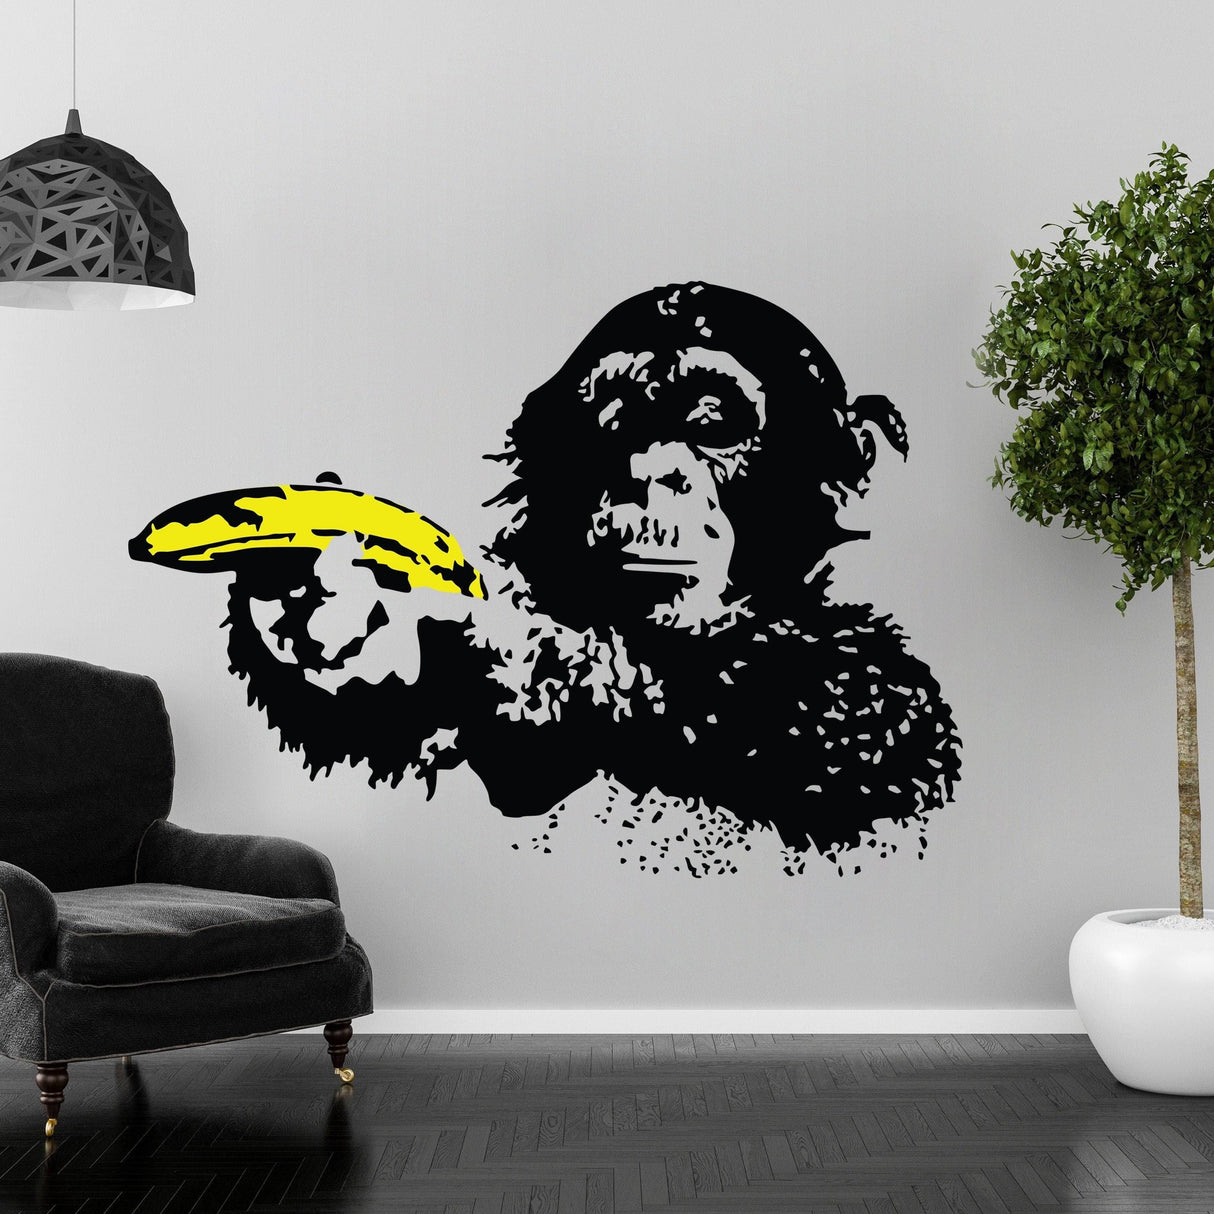 Banksy Monkey Wall Sticker - Bansky Art Vinyl Decal - Street Graffiti Focus Chimp Mural 134 x 93